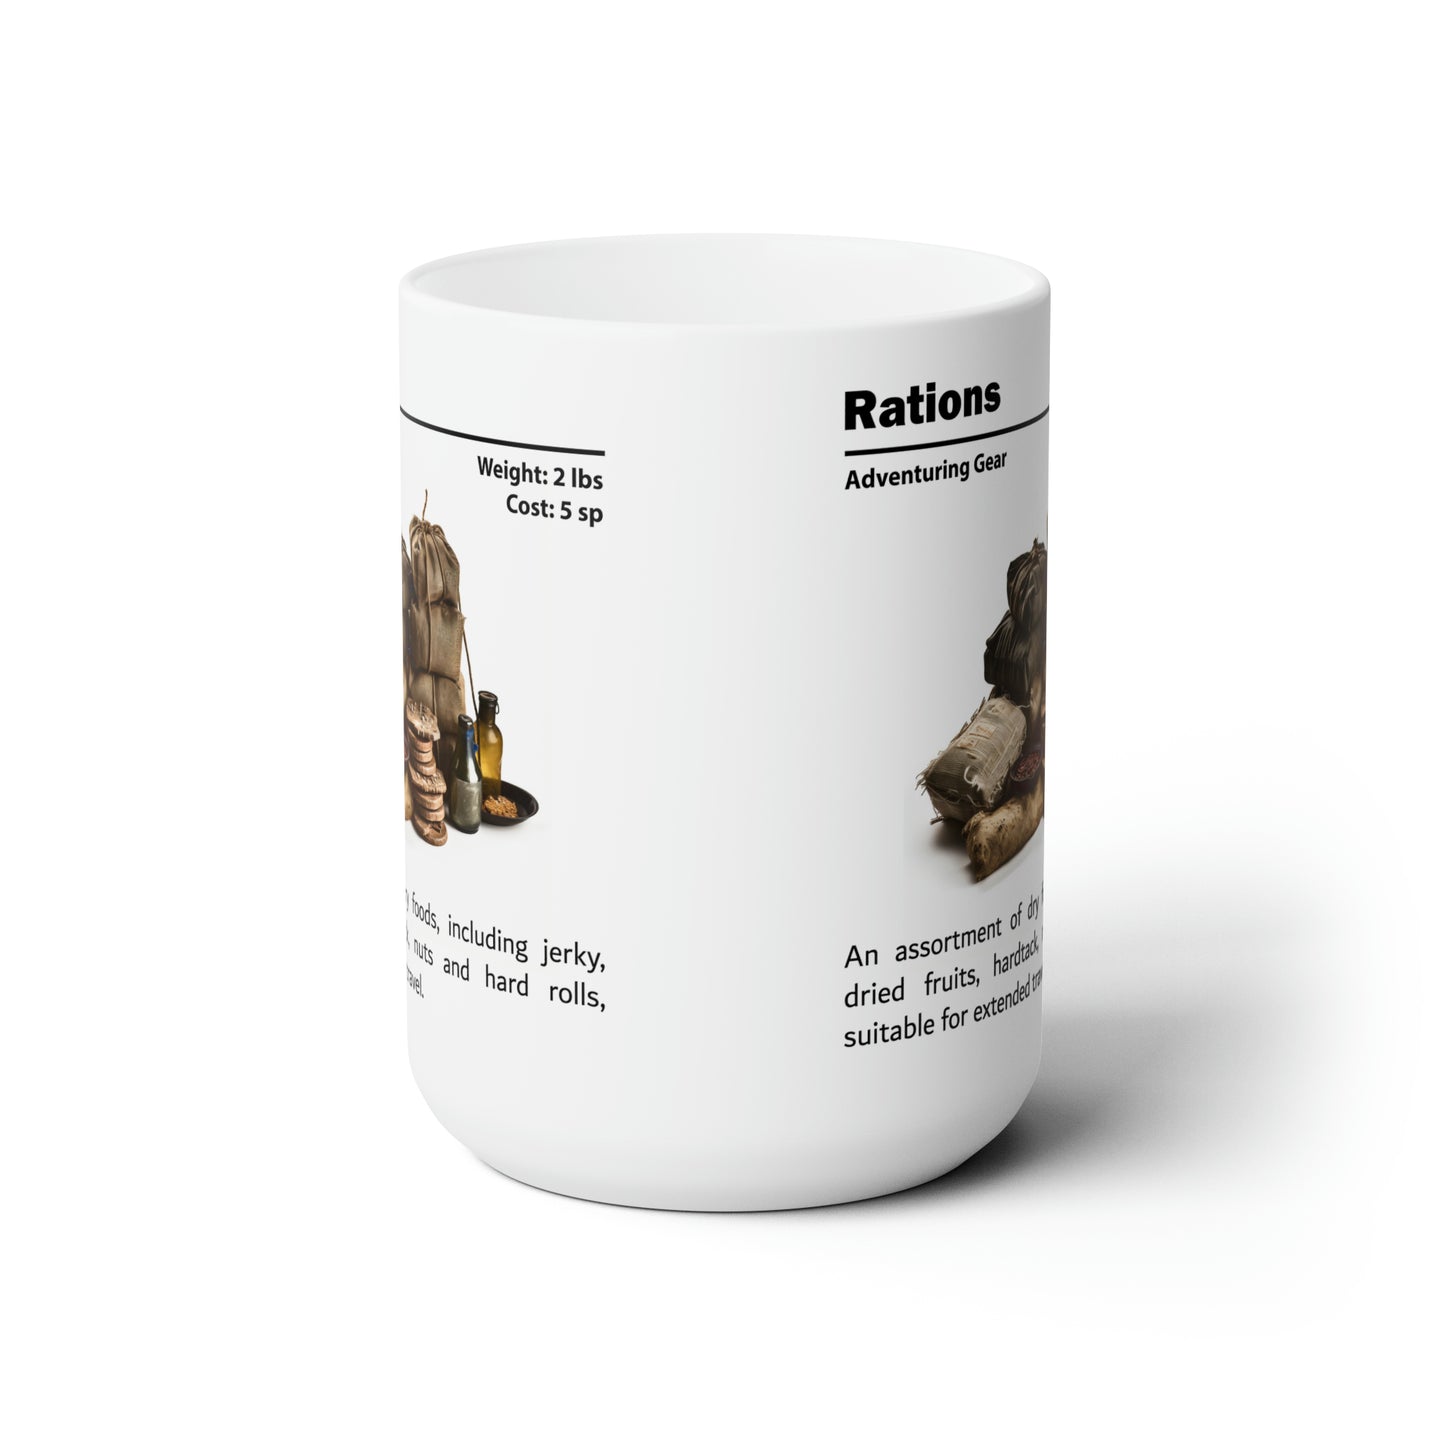 DnD Rations Ceramic Mug 15oz, DnD Mug, D&D Adventuring Gear Coffee Mug, Explorer's Pack Equipment Tea Mug, Dungeon Master Gift